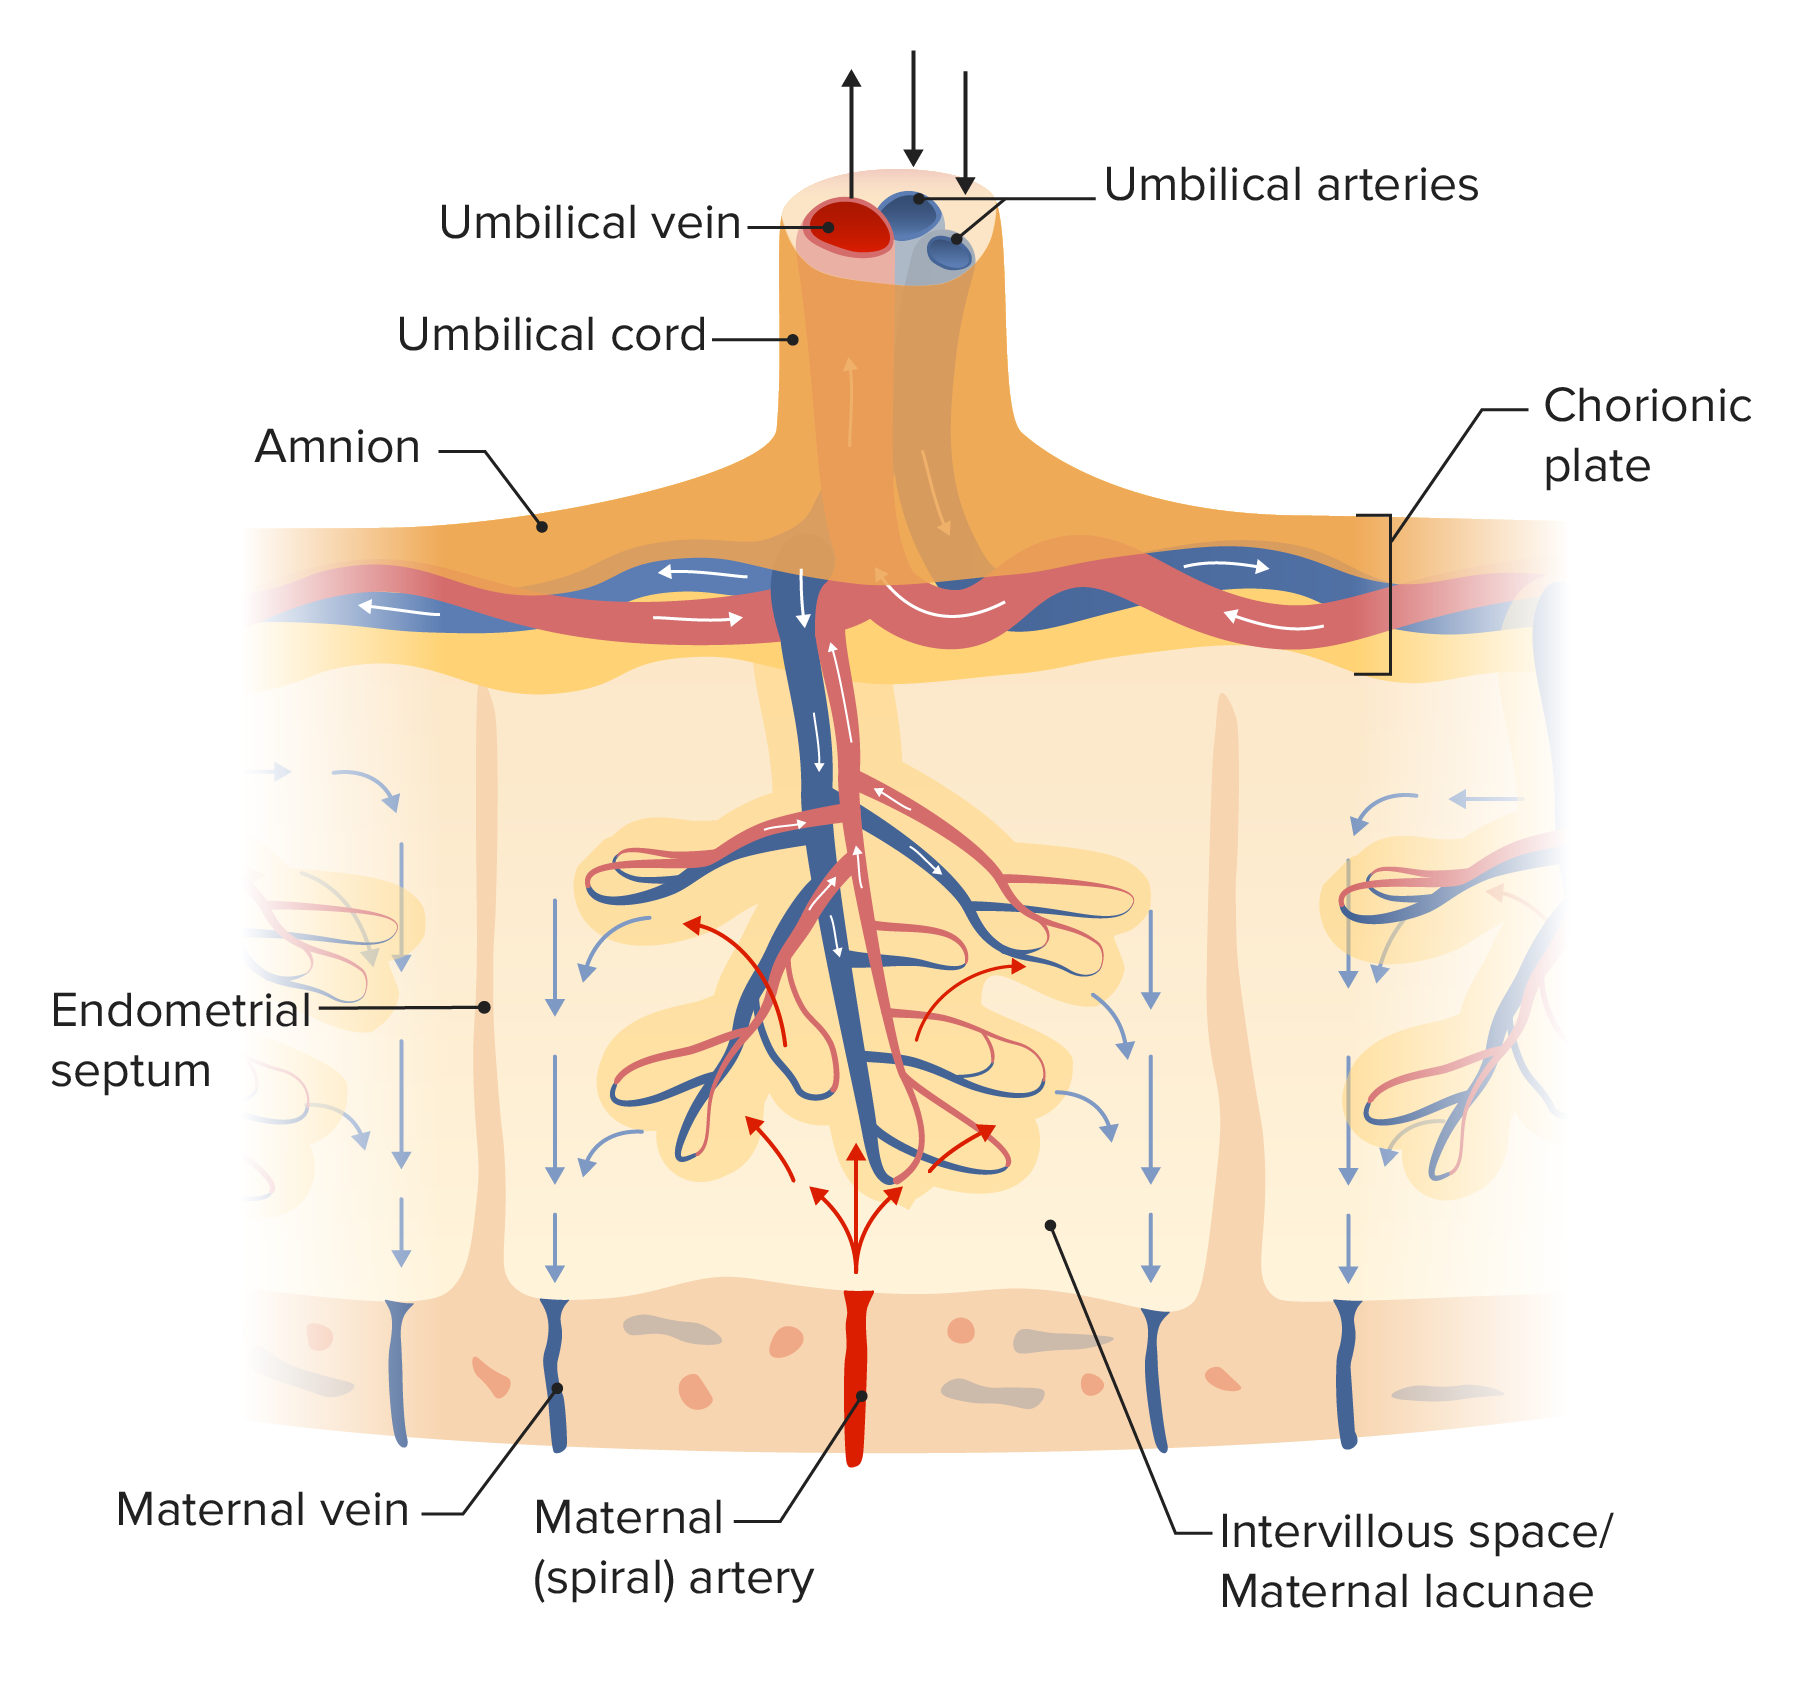 Anatomy of the umbilical cord